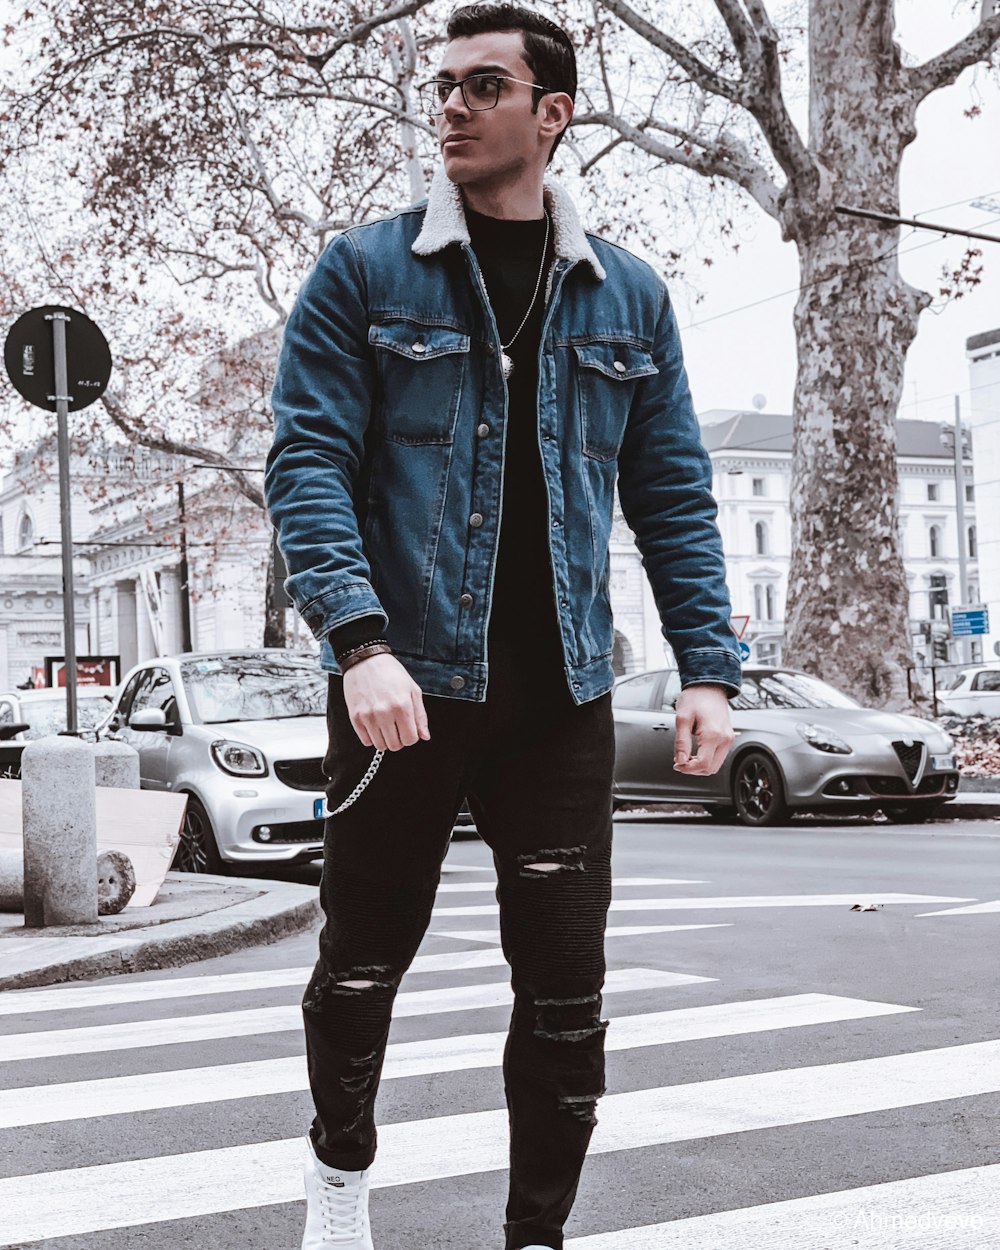 Man in blue zip up jacket standing on pedestrian lane during daytime photo  – Free Portraitphotography Image on Unsplash